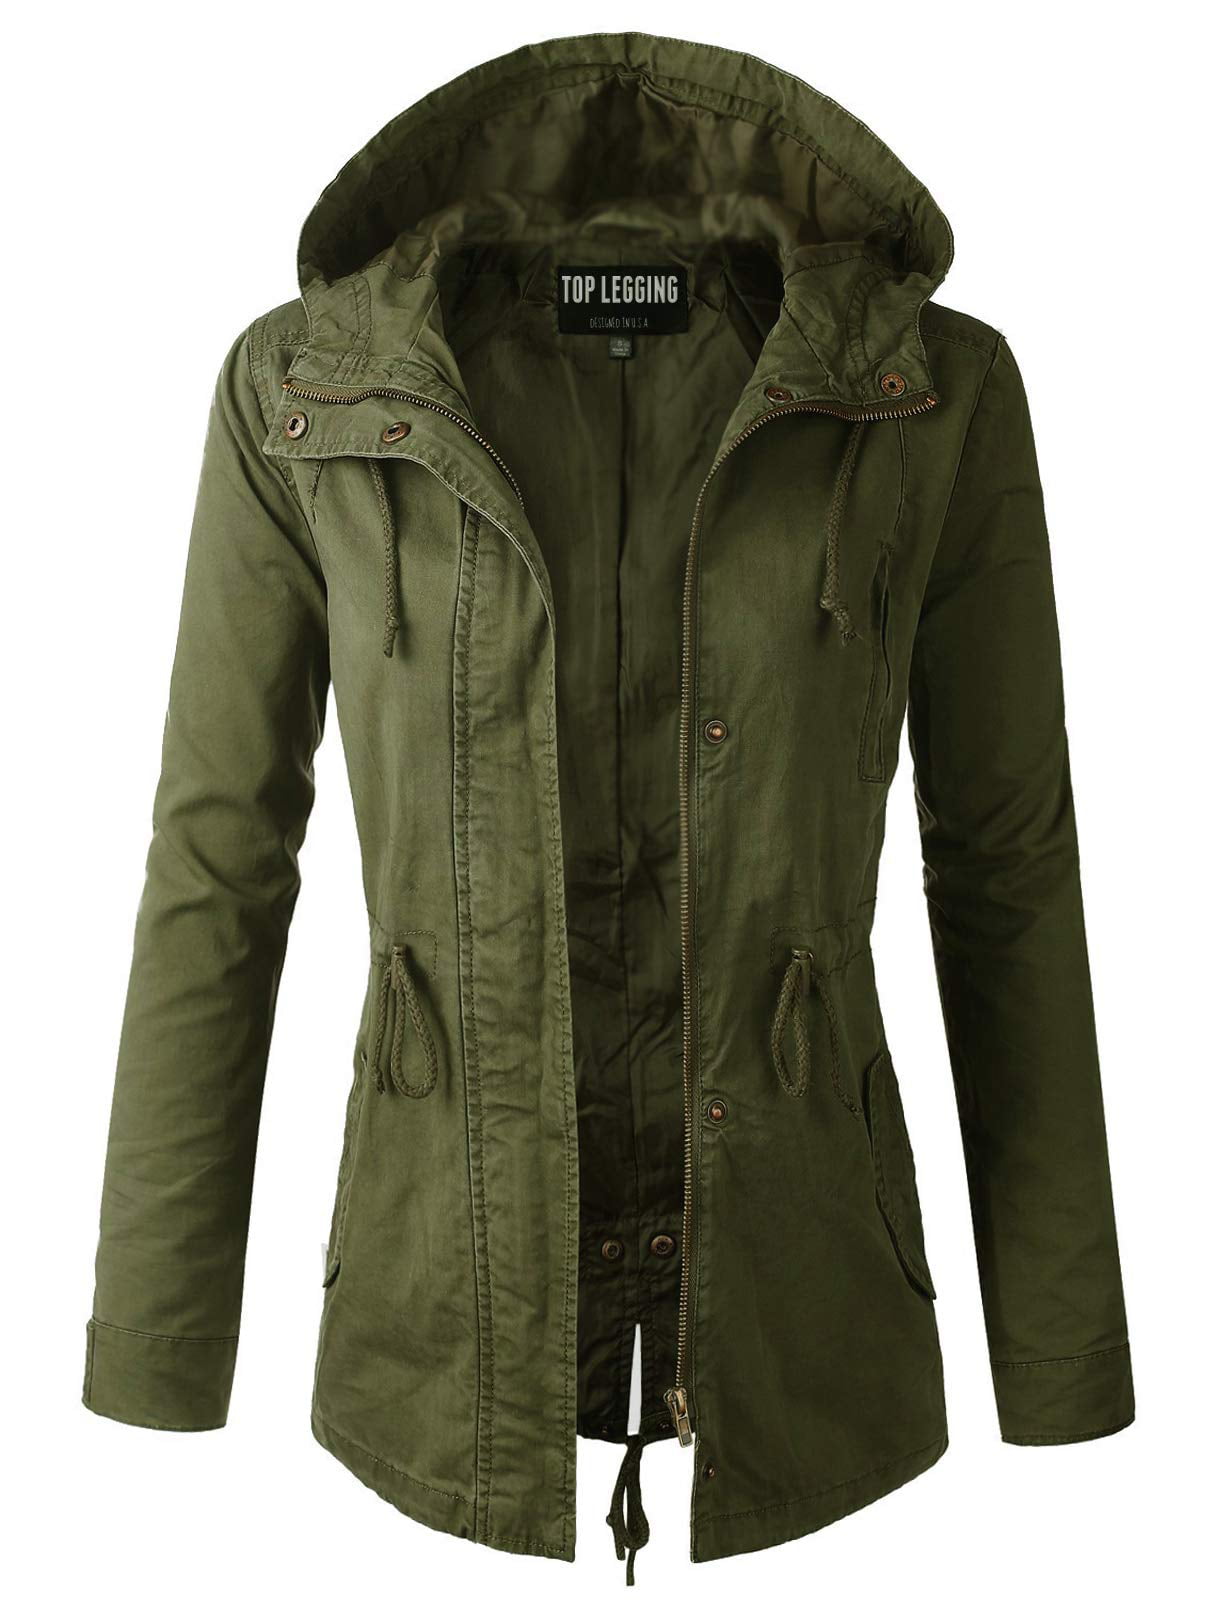 Ambiance Coats & Jackets Womens Jacket Army Large Military Utility